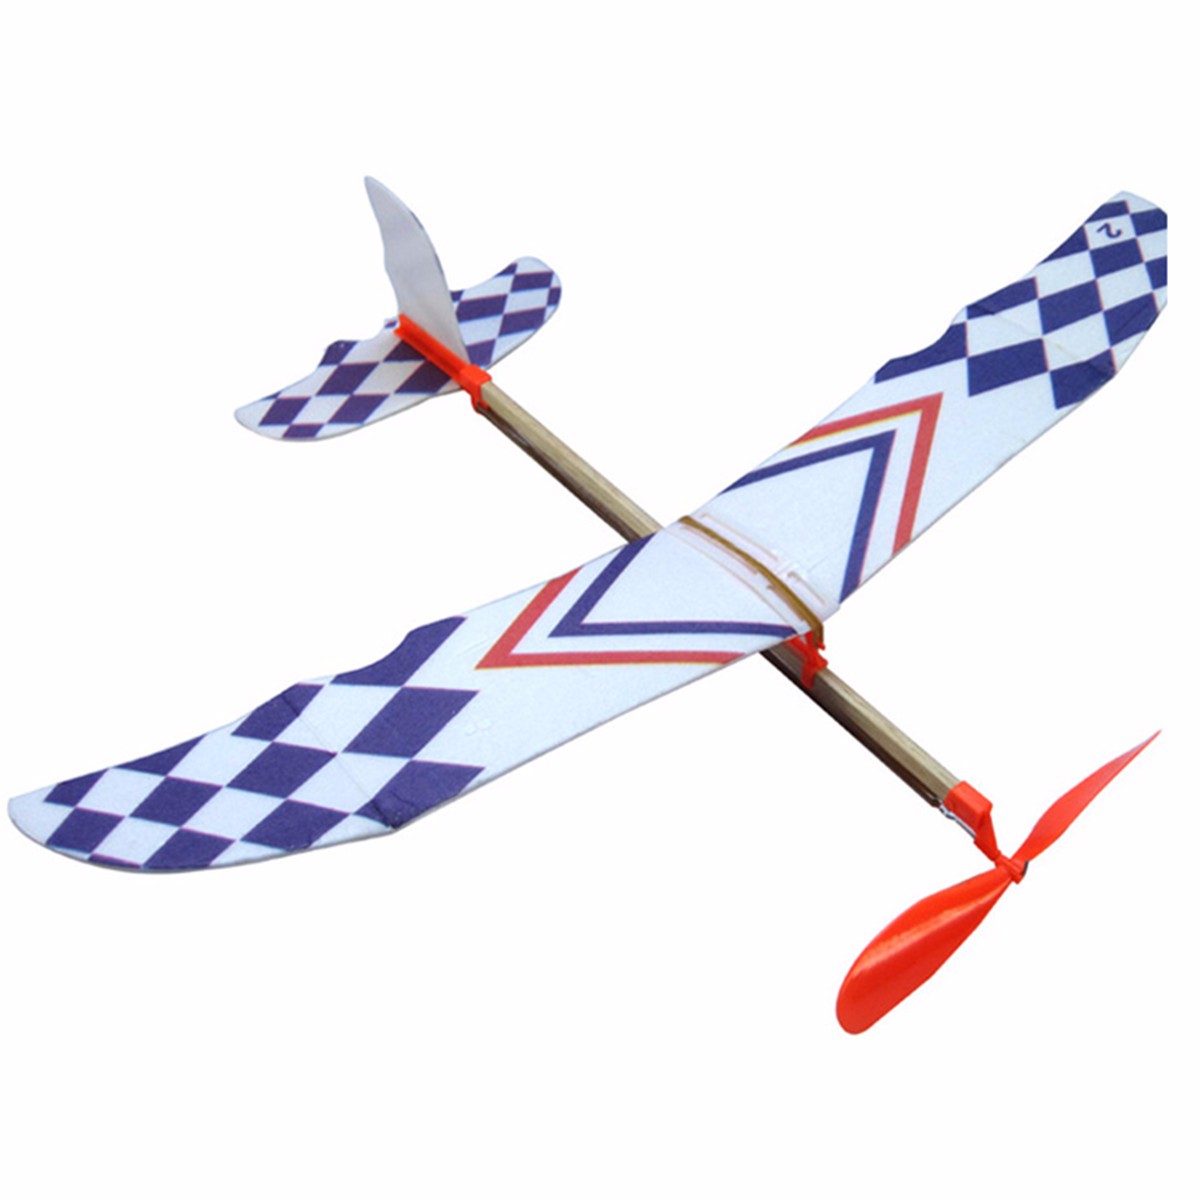 Elastic-Rubber-Band-Powered-DIY-Foam-Plane-Kit-Aircraft-Model-Educational-Toy-1120805